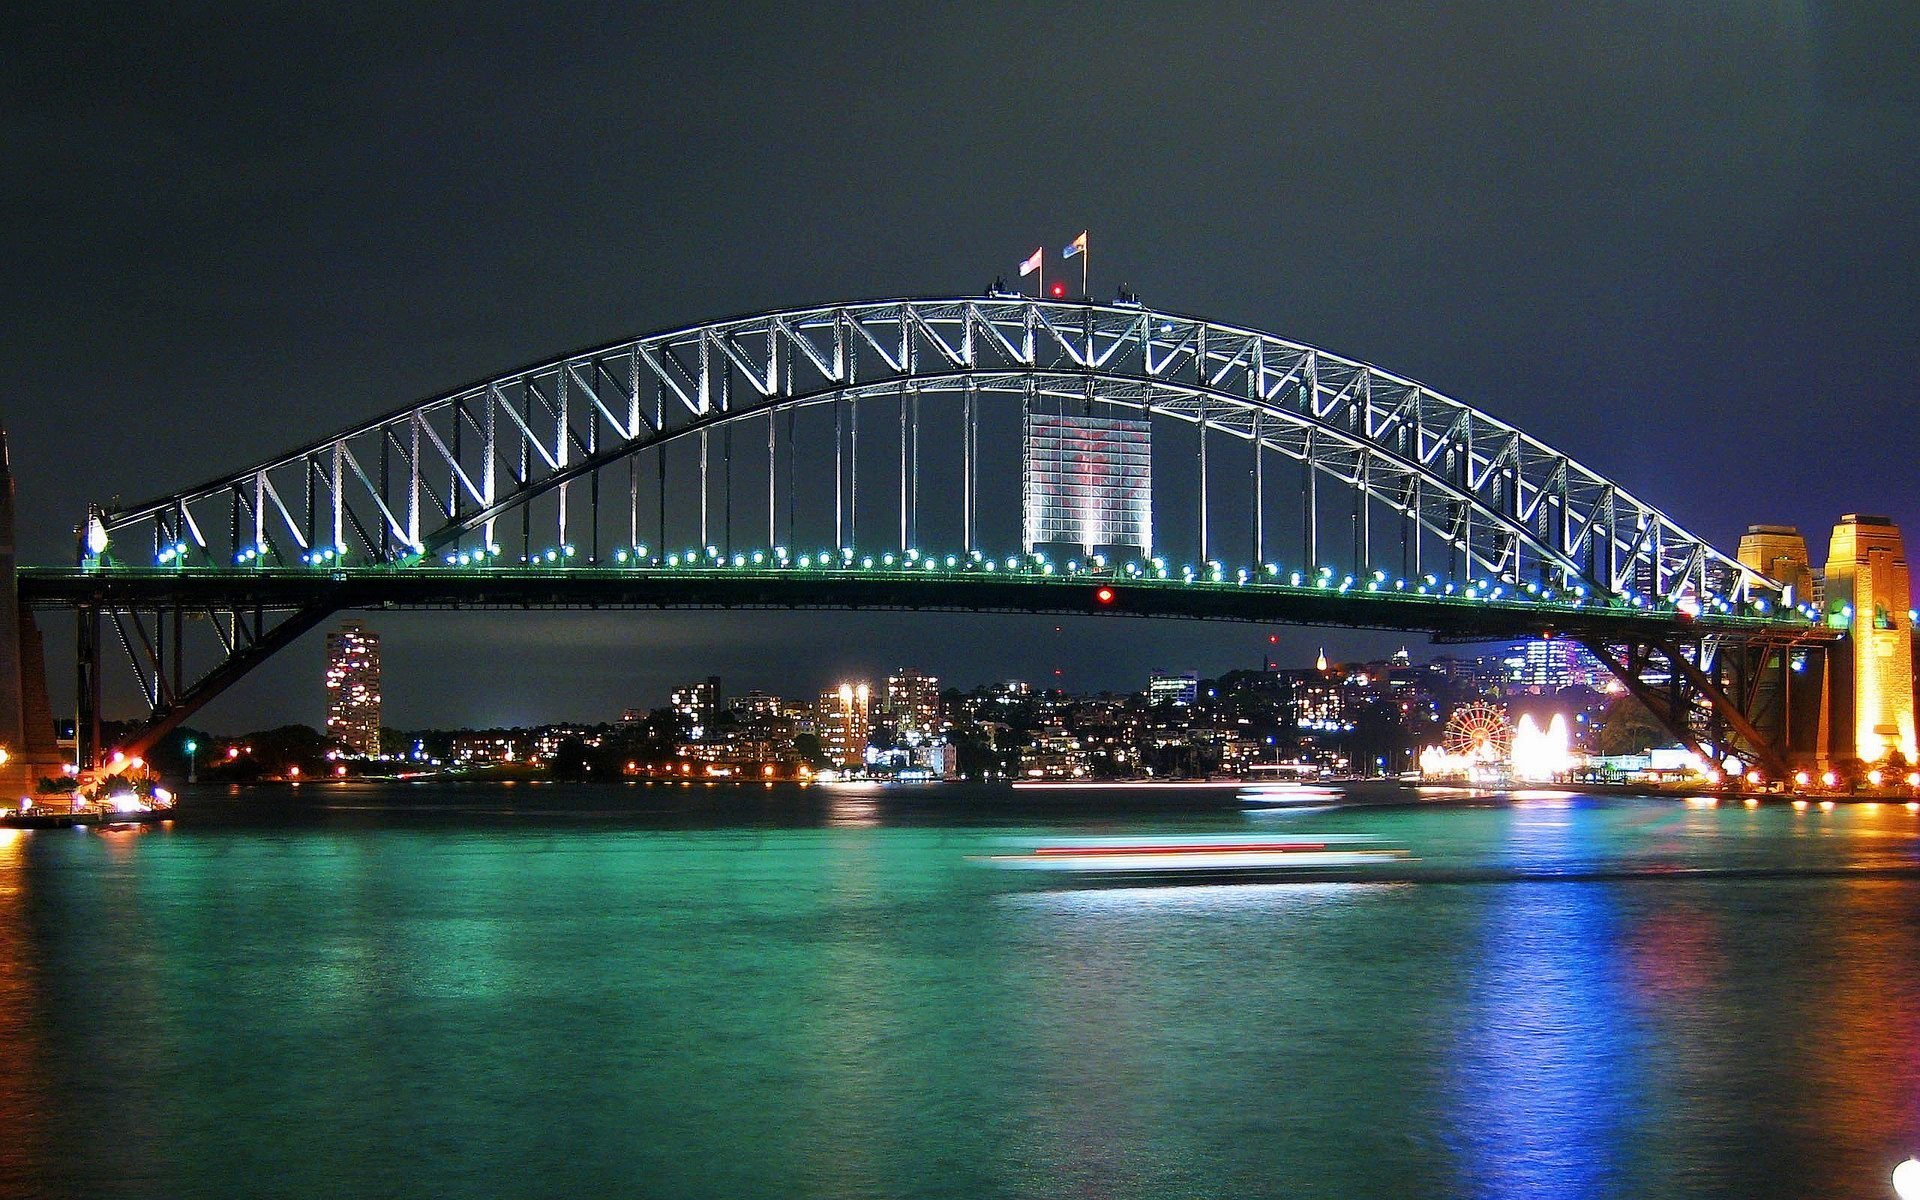 Harbour bridge. Харбор-бридж Сидней. Сиднейский мост Харбор-бридж. Австралия.Сидней.мост Харбор-бридж. Сидней мост Харбор-бридж фото.